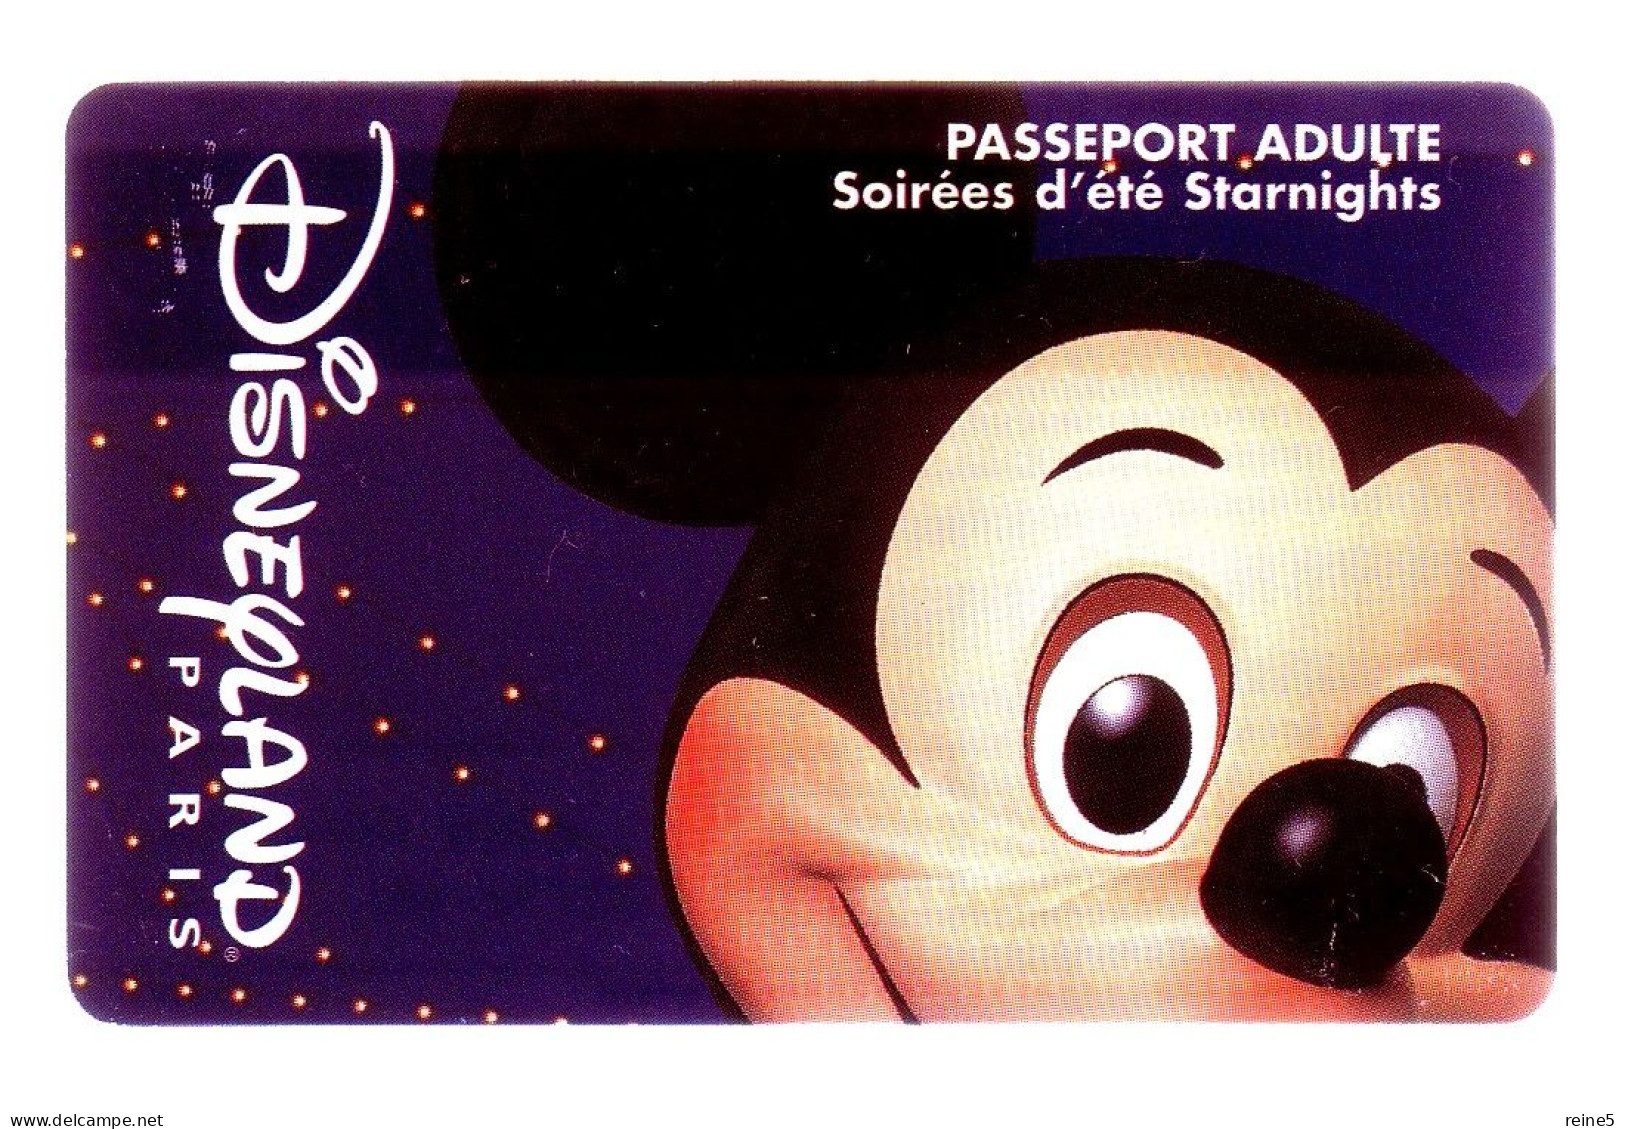 PASSEPORT ADULTE MICKEY SOIREES D'ETE STARNIGHTS DISNEYLAND PARIS -TRES BON ETAT -REF-PASS DISNEY-14 - Toegangsticket Disney